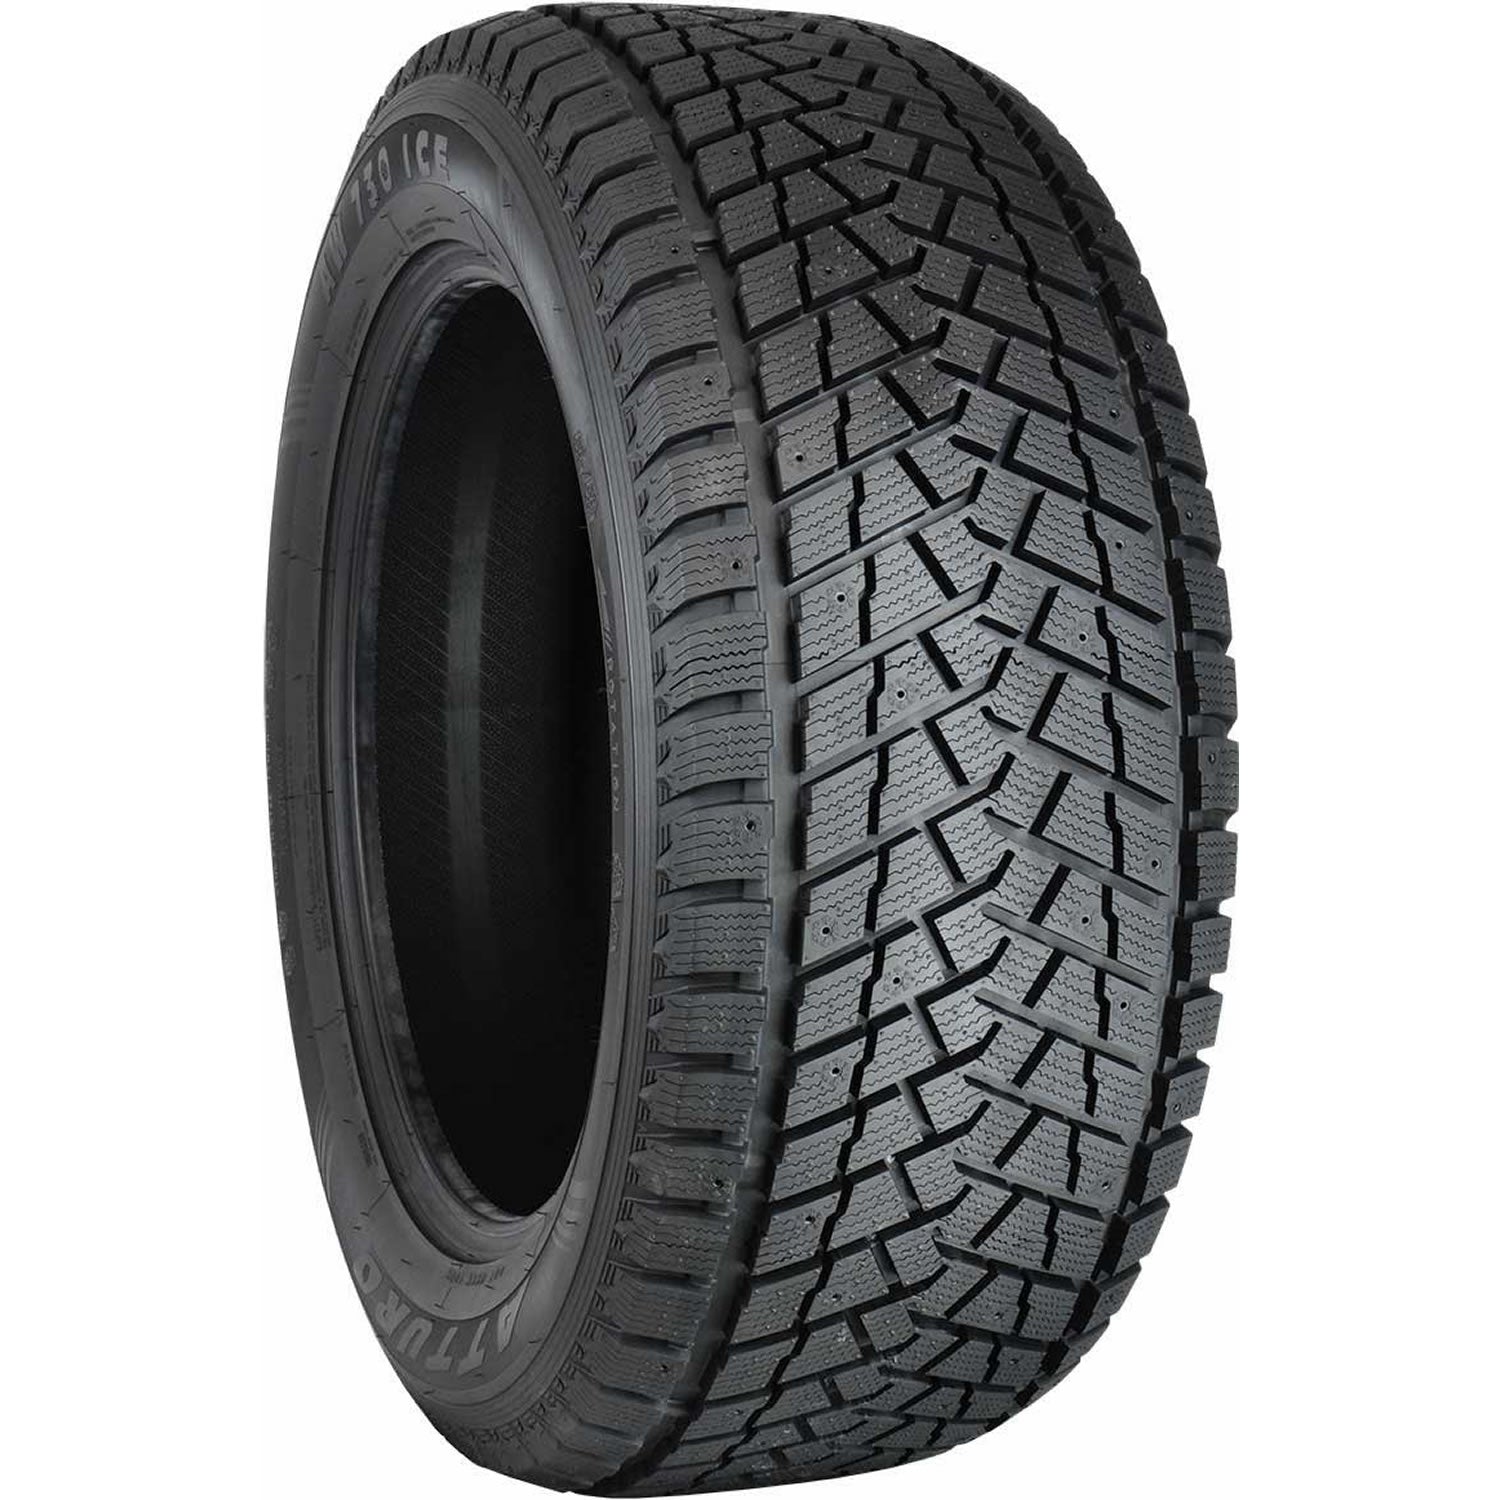 ATTURO AW730 ICE 255/50R19 (29.2X10.3R 19) Tires